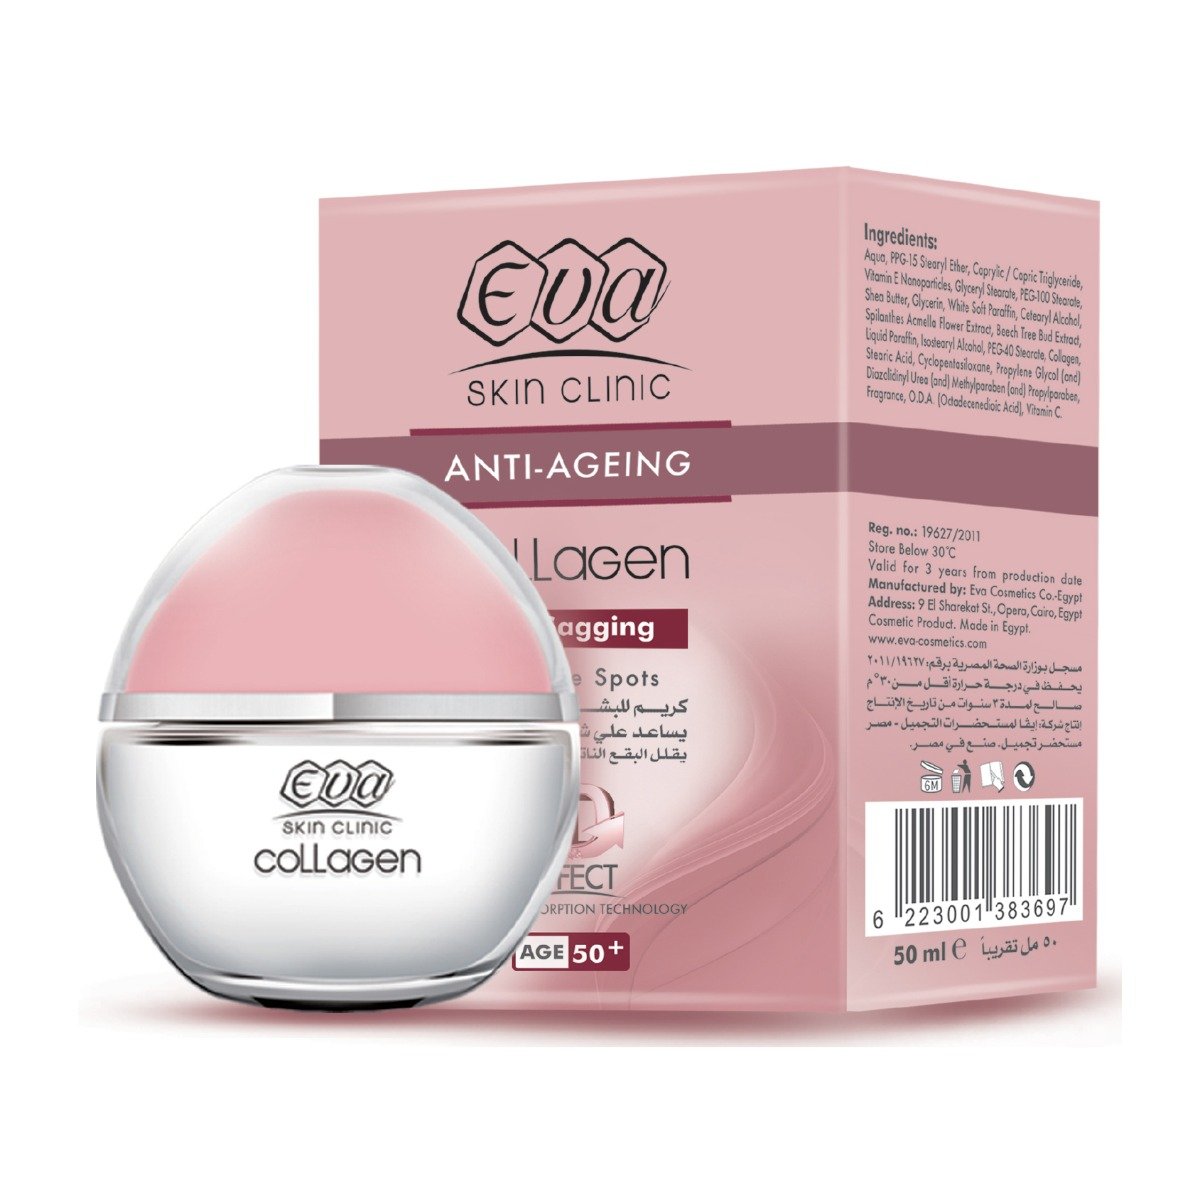 Eva Skin Clinic Collagen Anti Sagging Age 50+ - 50ml - Bloom Pharmacy